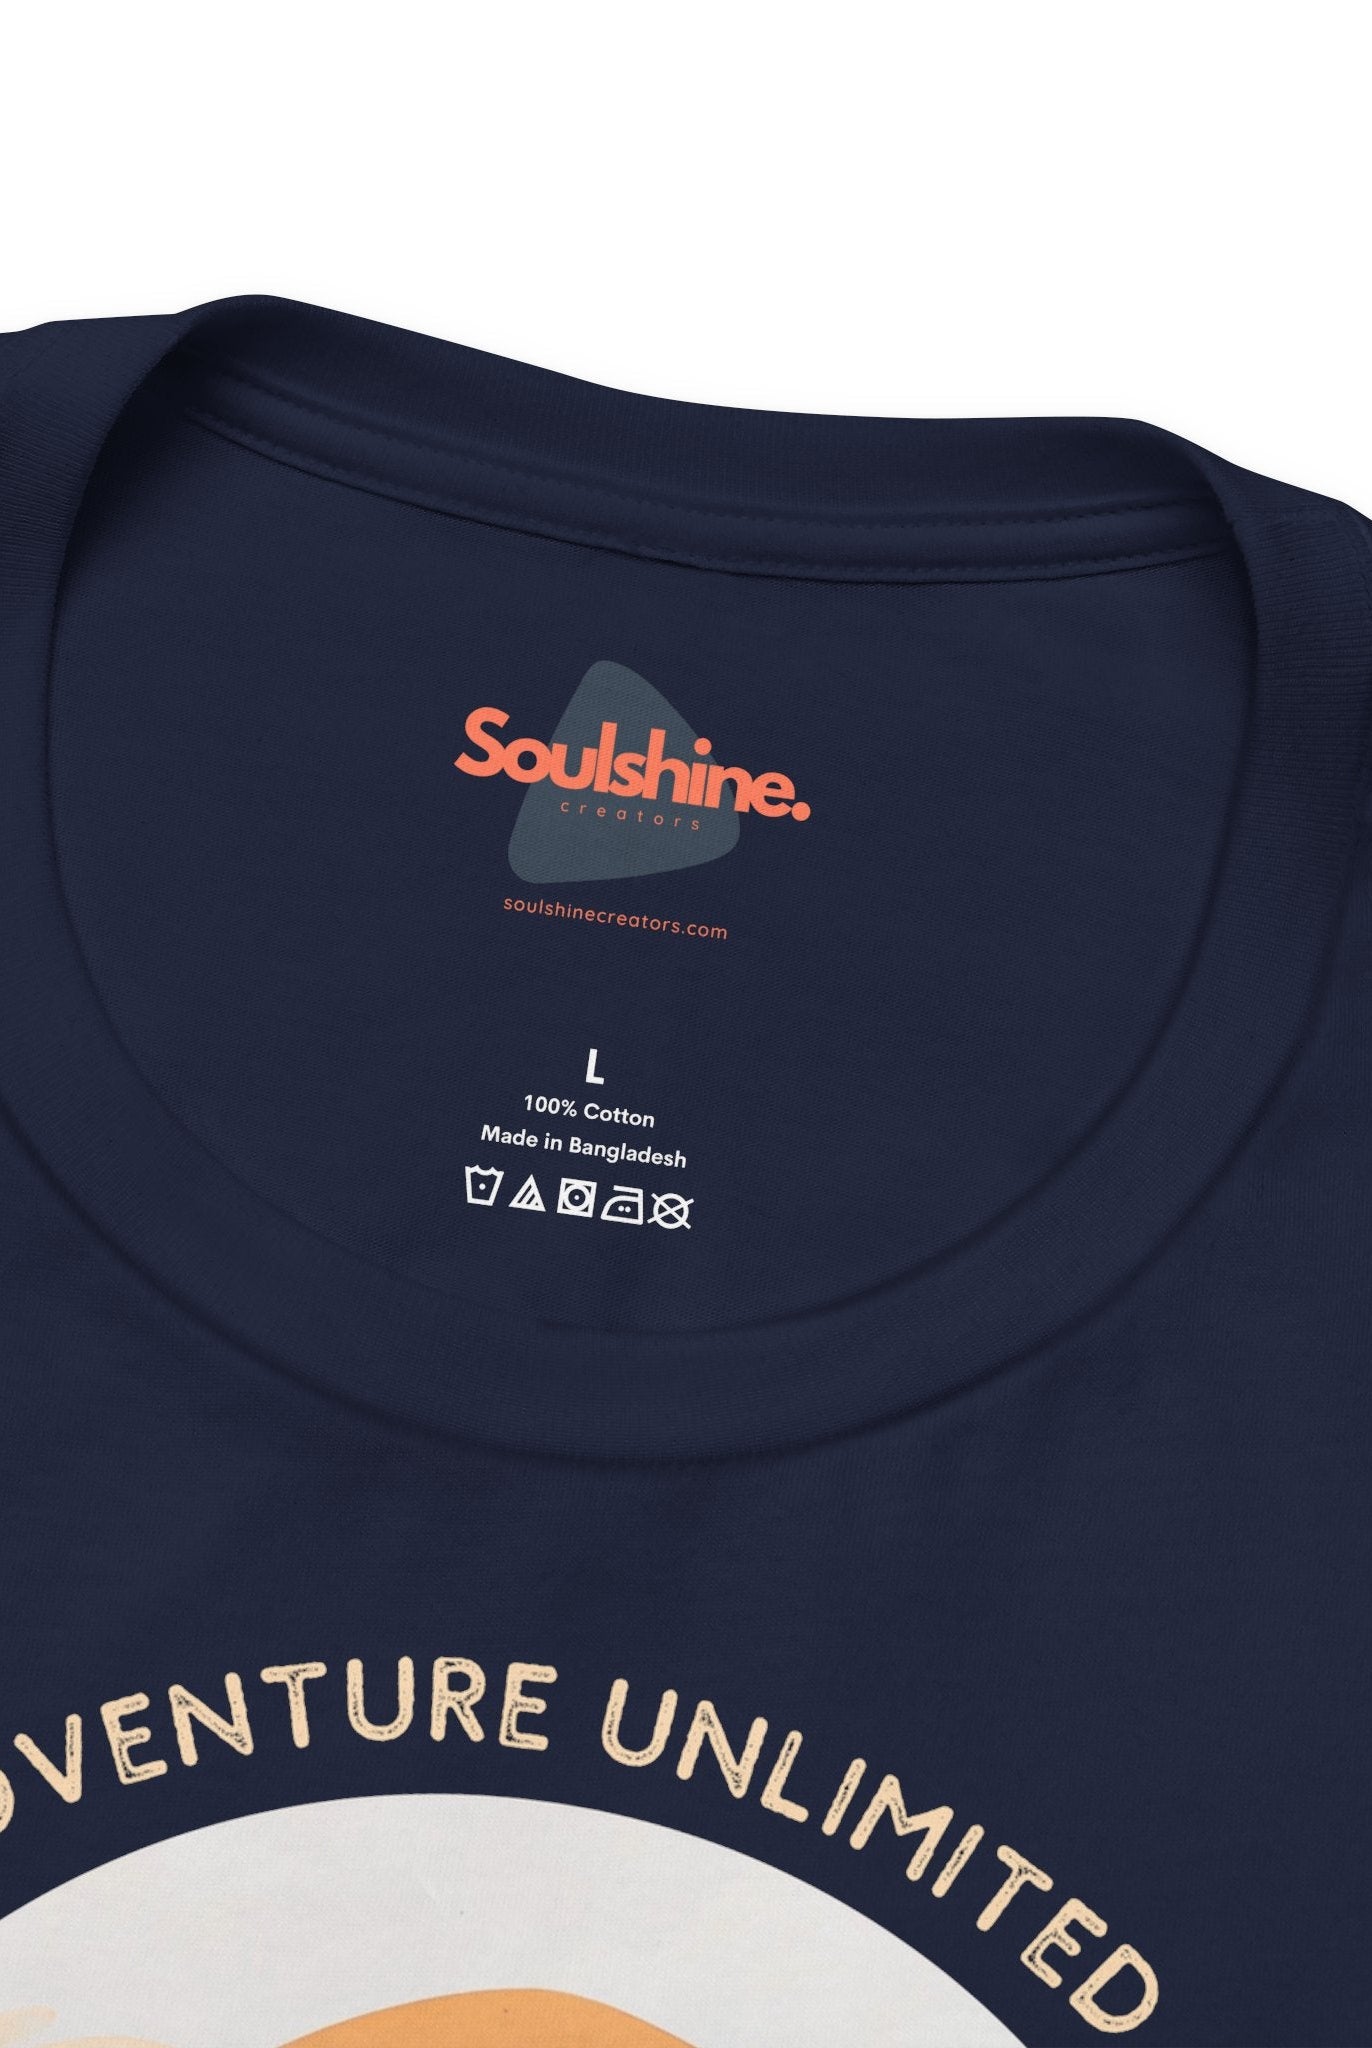 Adventure Unlimited - Surfing T-Shirt - Soulshinecreators - Direct-to-Garment Printed Item